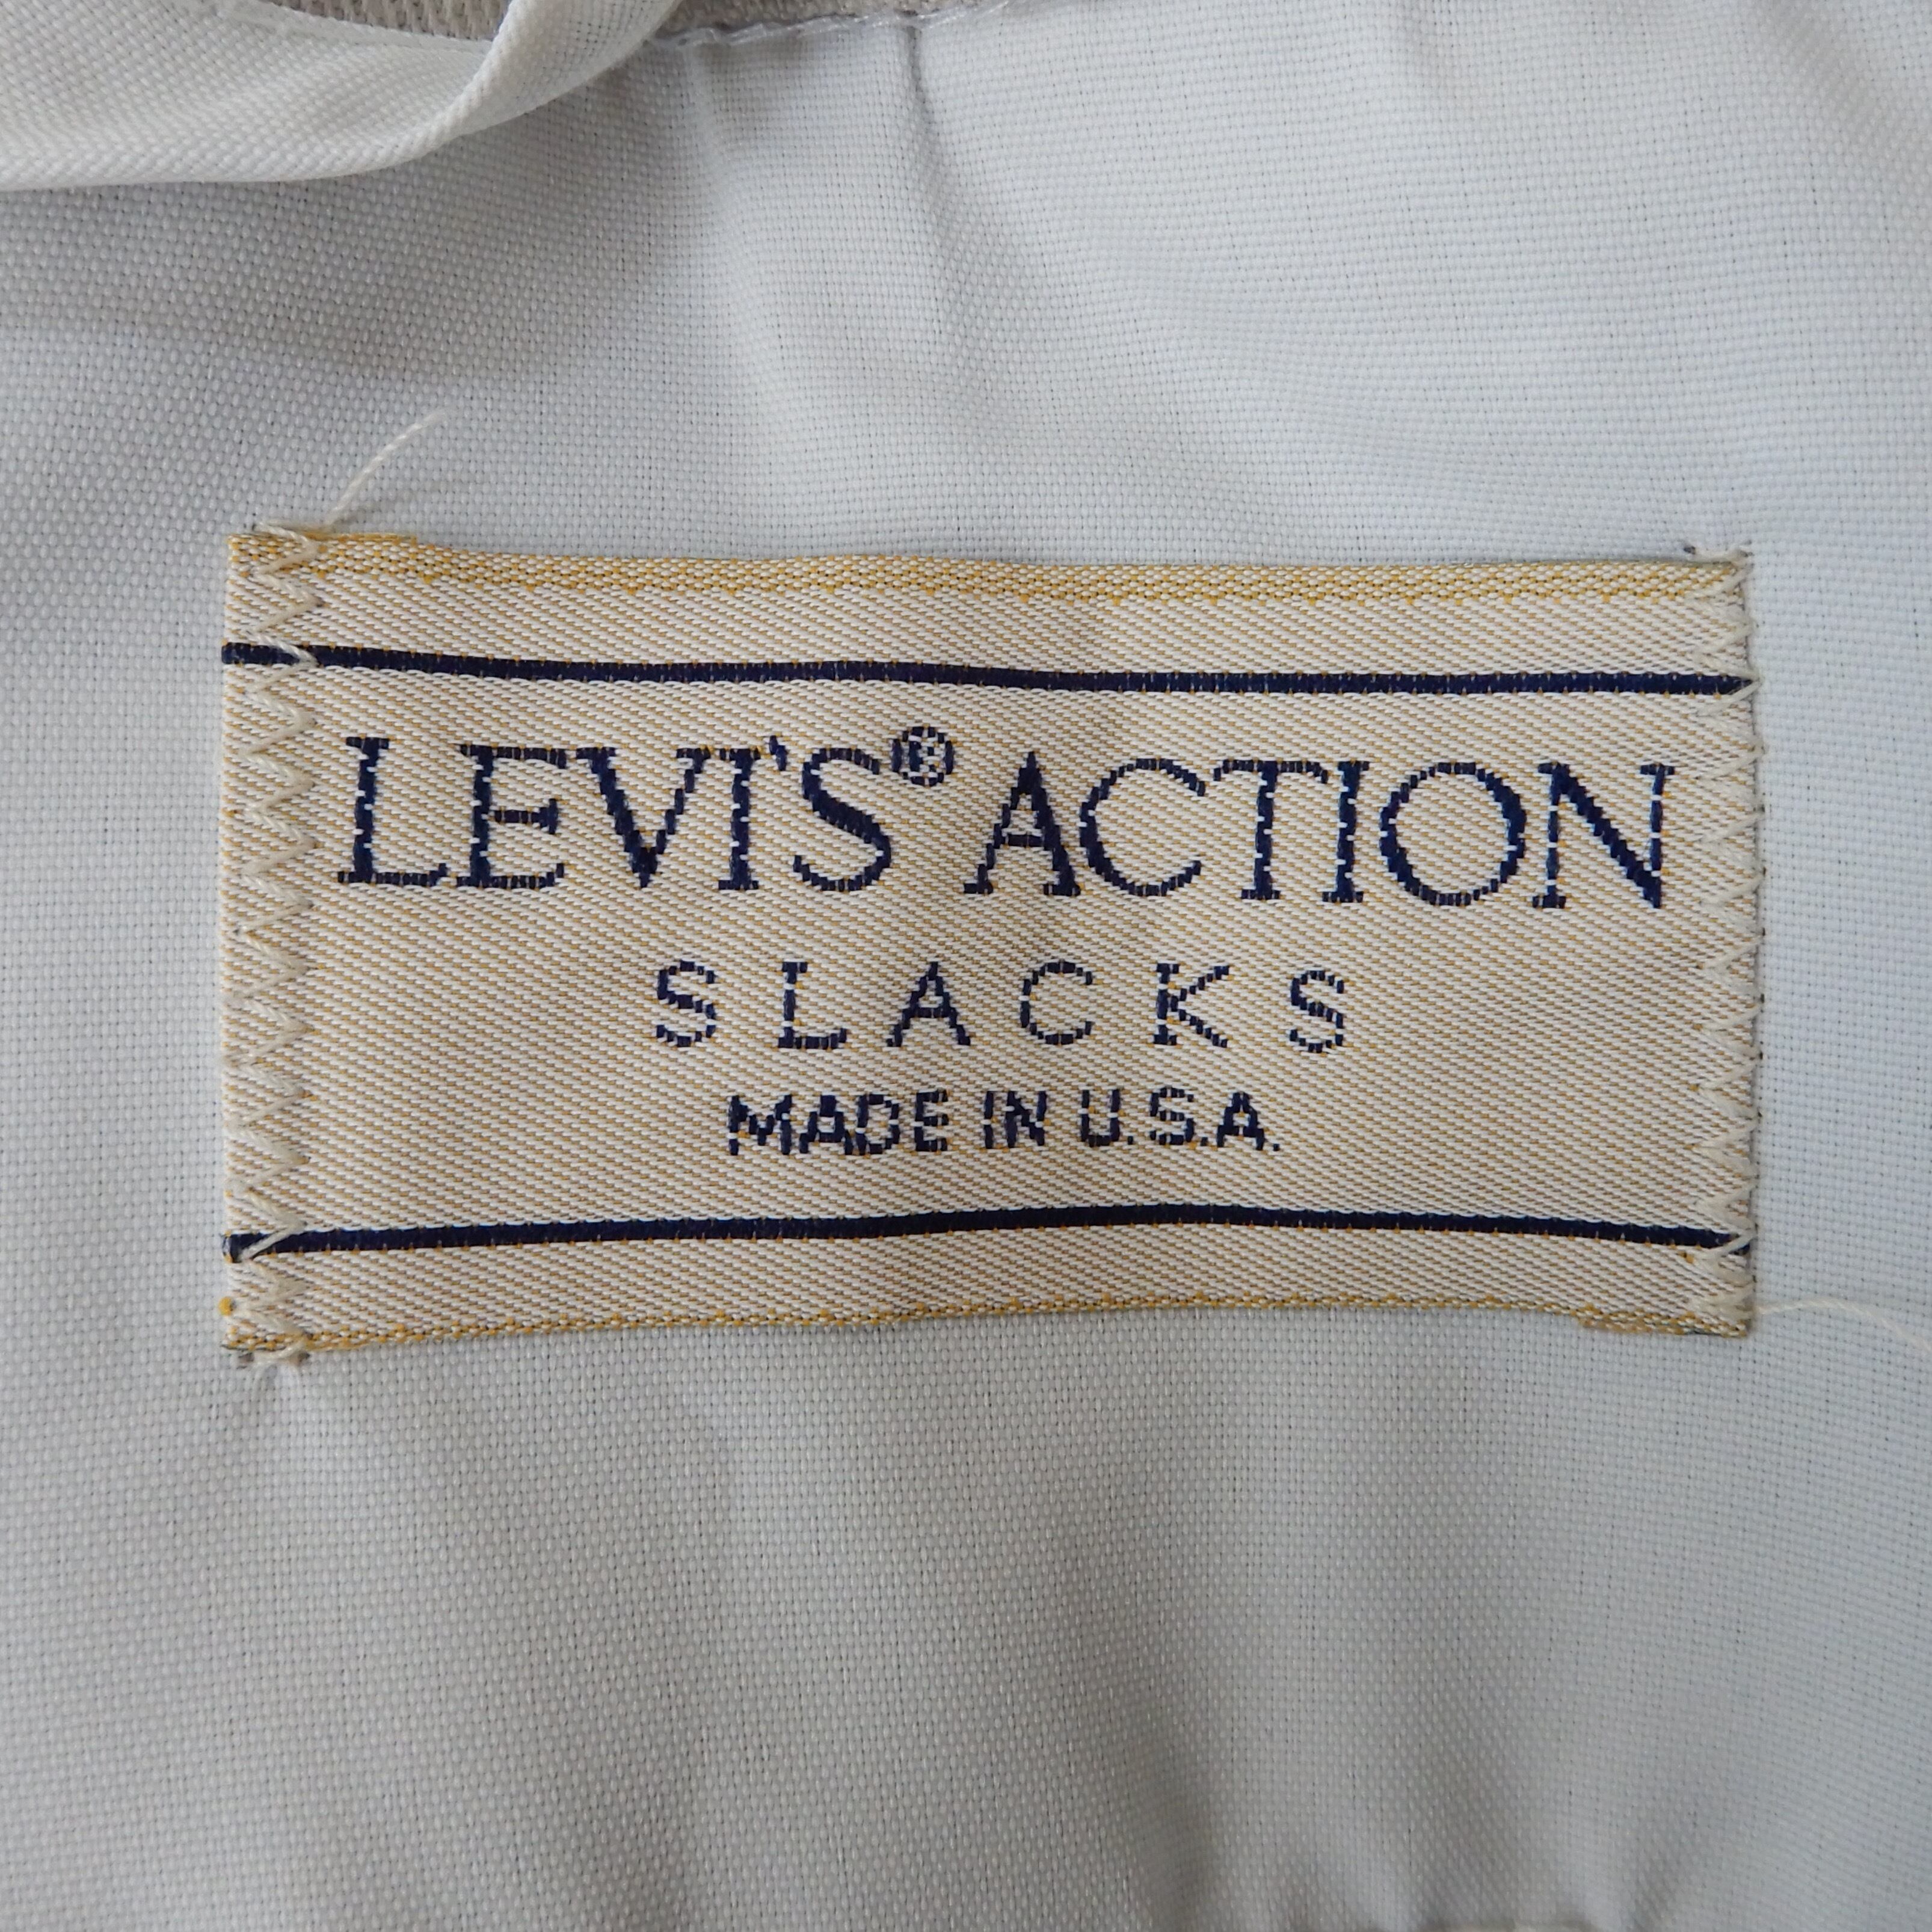 Levi's ACTION SLACKS Beige 1980s USA